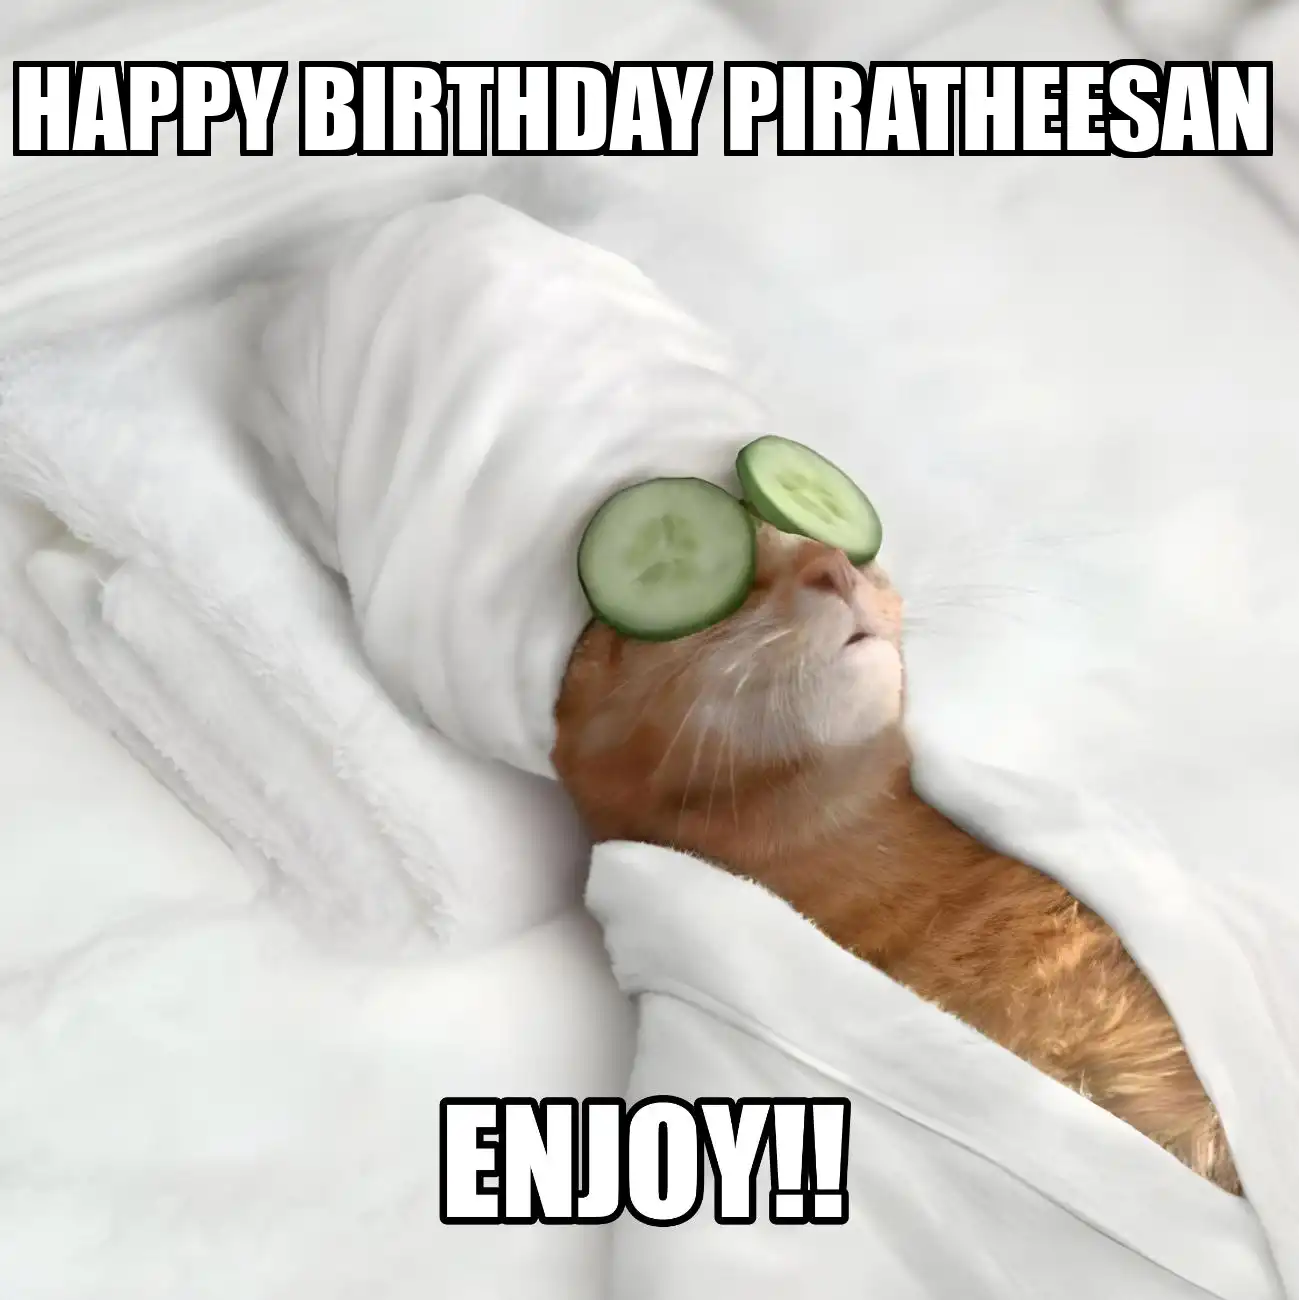 Happy Birthday Piratheesan Enjoy Cat Meme